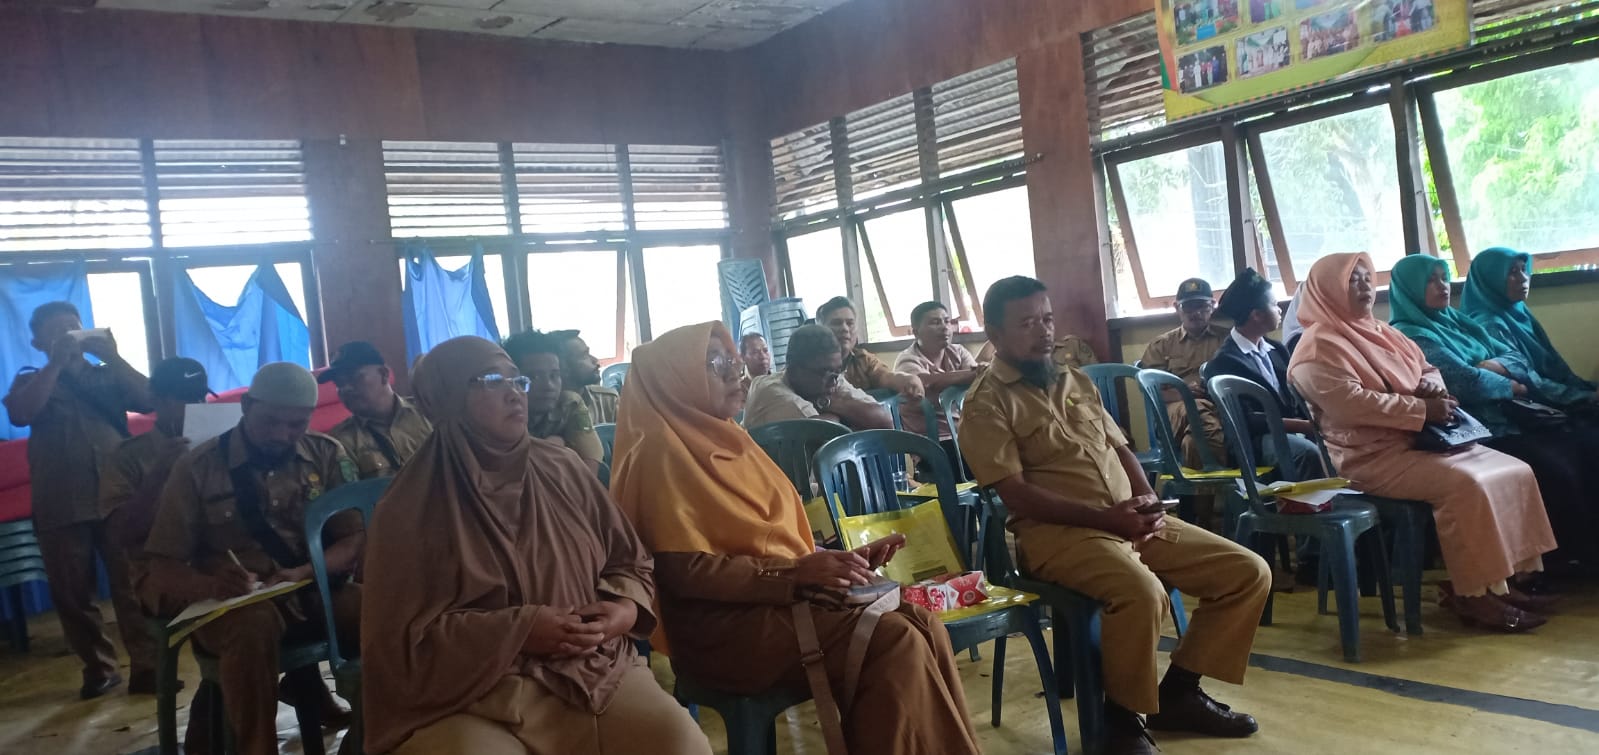 DP2KBP3A Inhil Taja Kegiatan Sosialisasi Hukum Keluarga di Kecamatan Pulau Burung